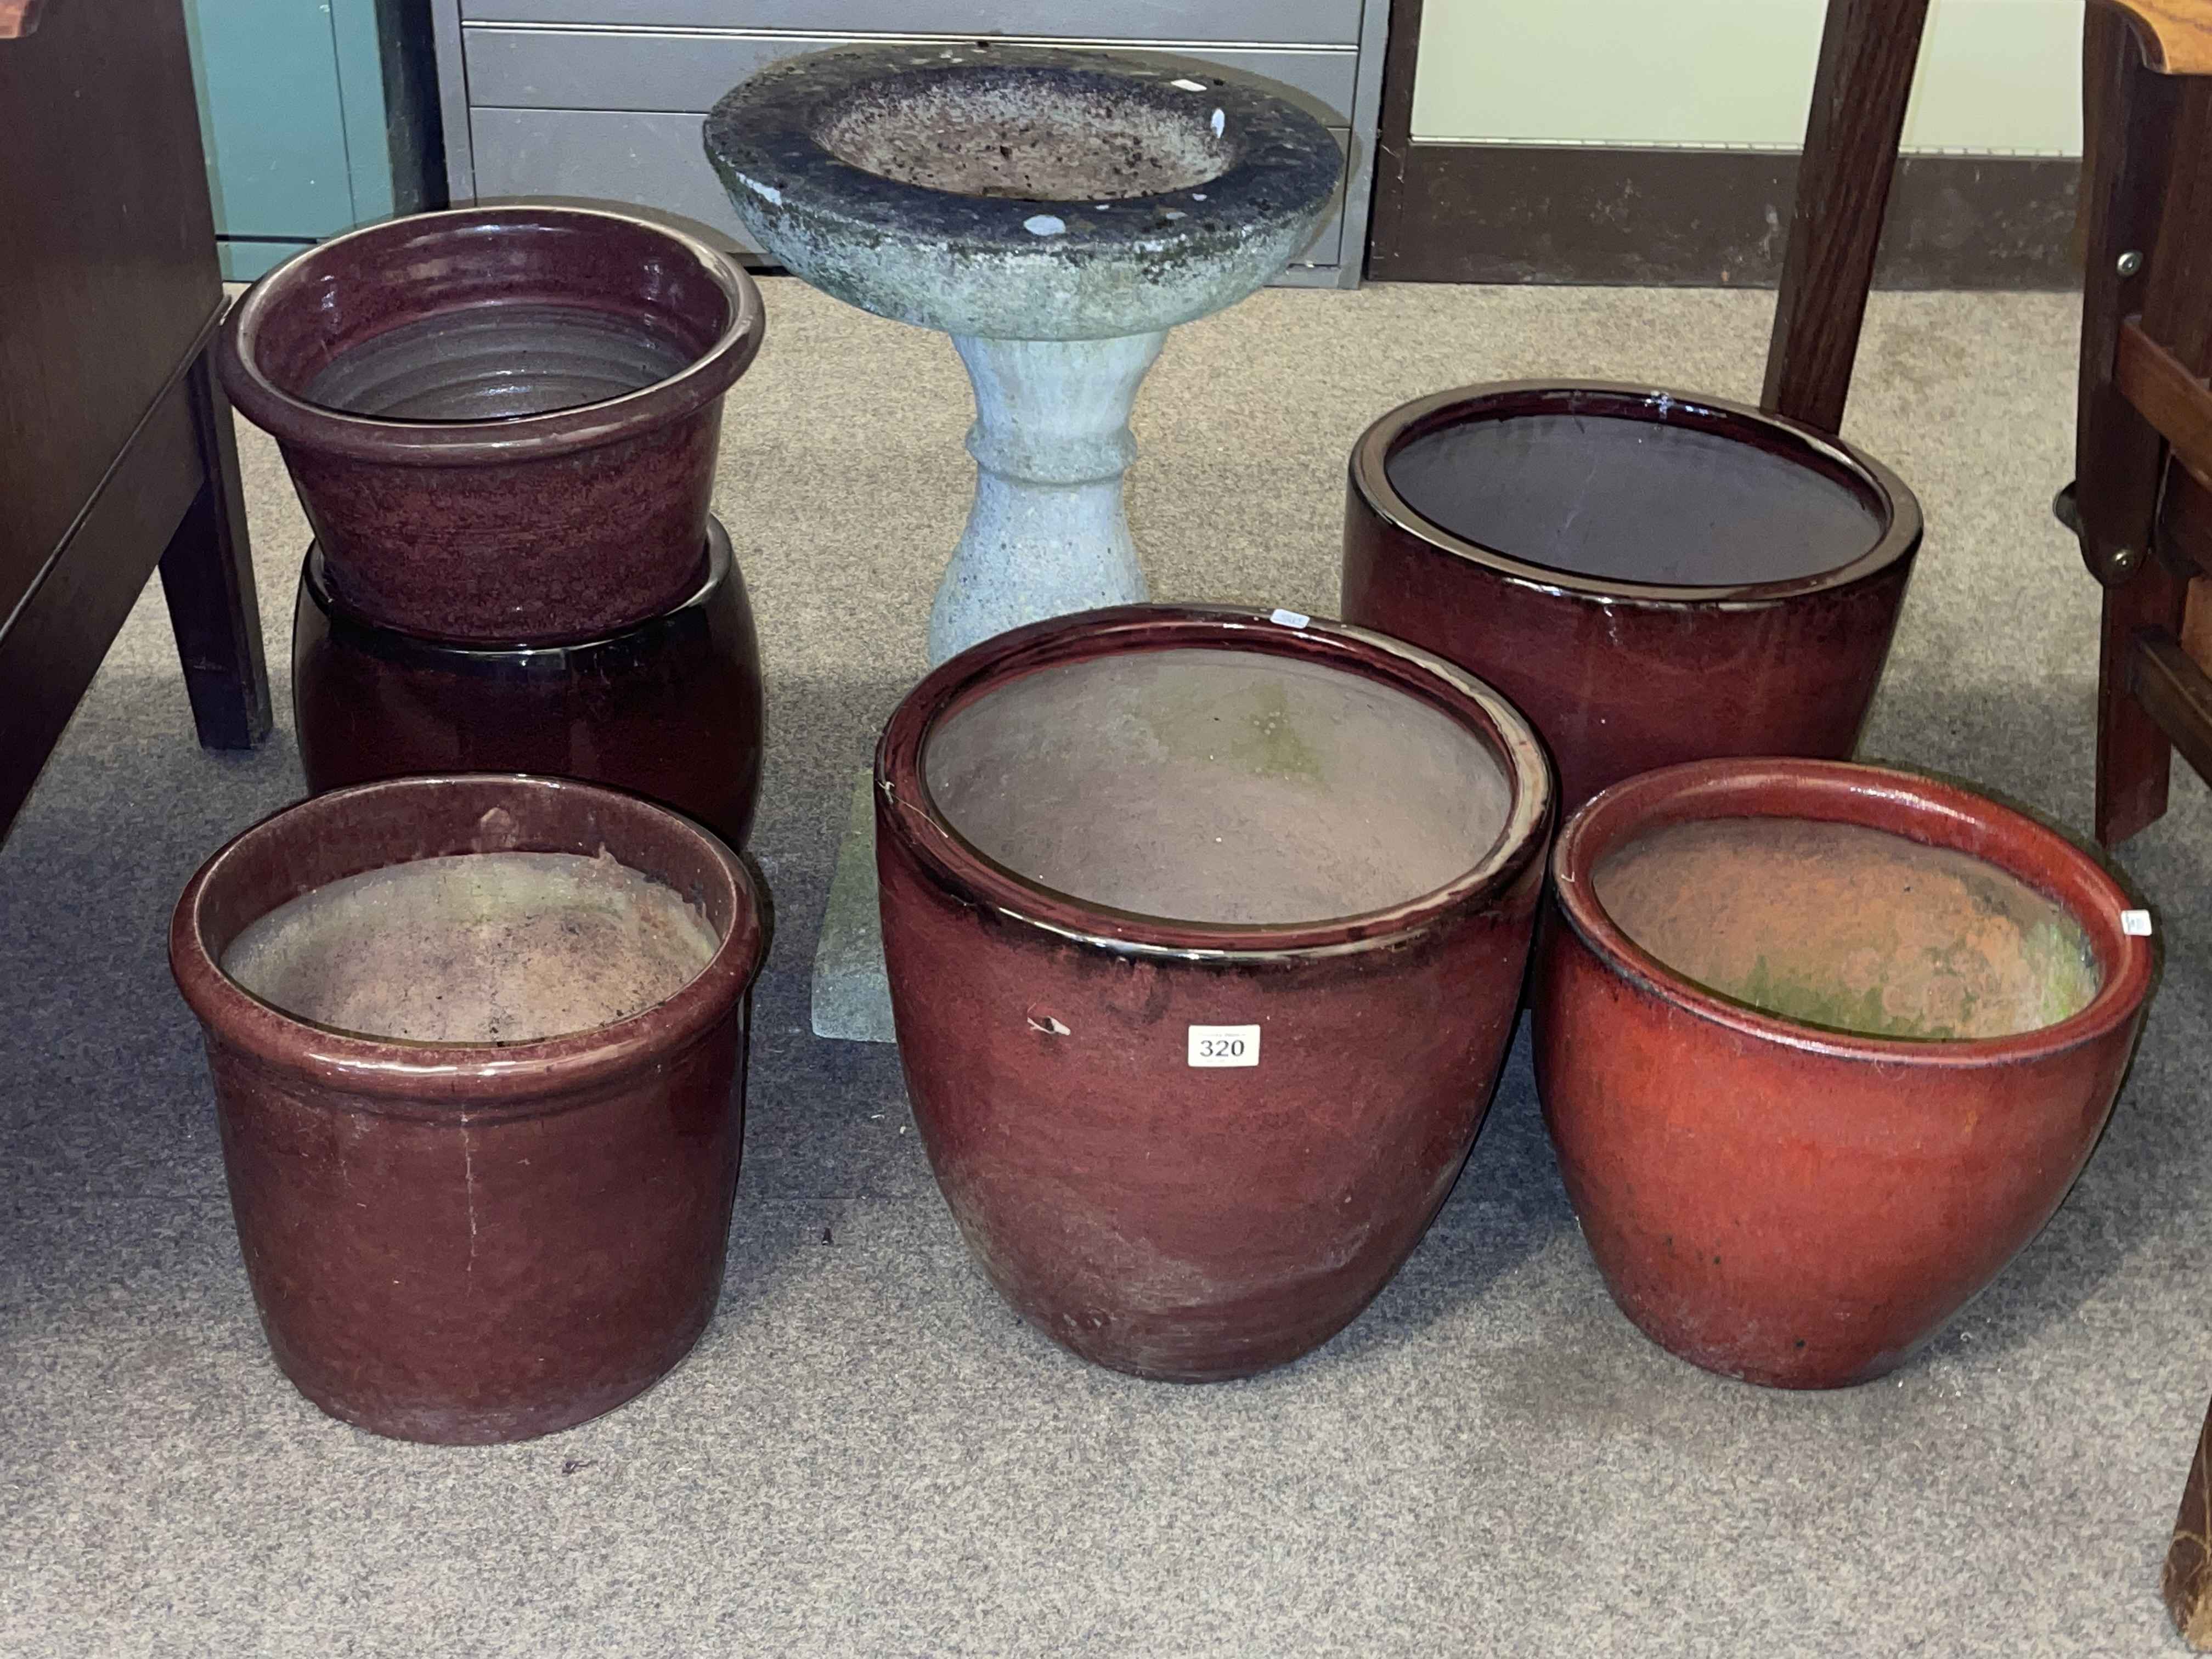 Pedestal bird bath and six various glazed pottery planters.